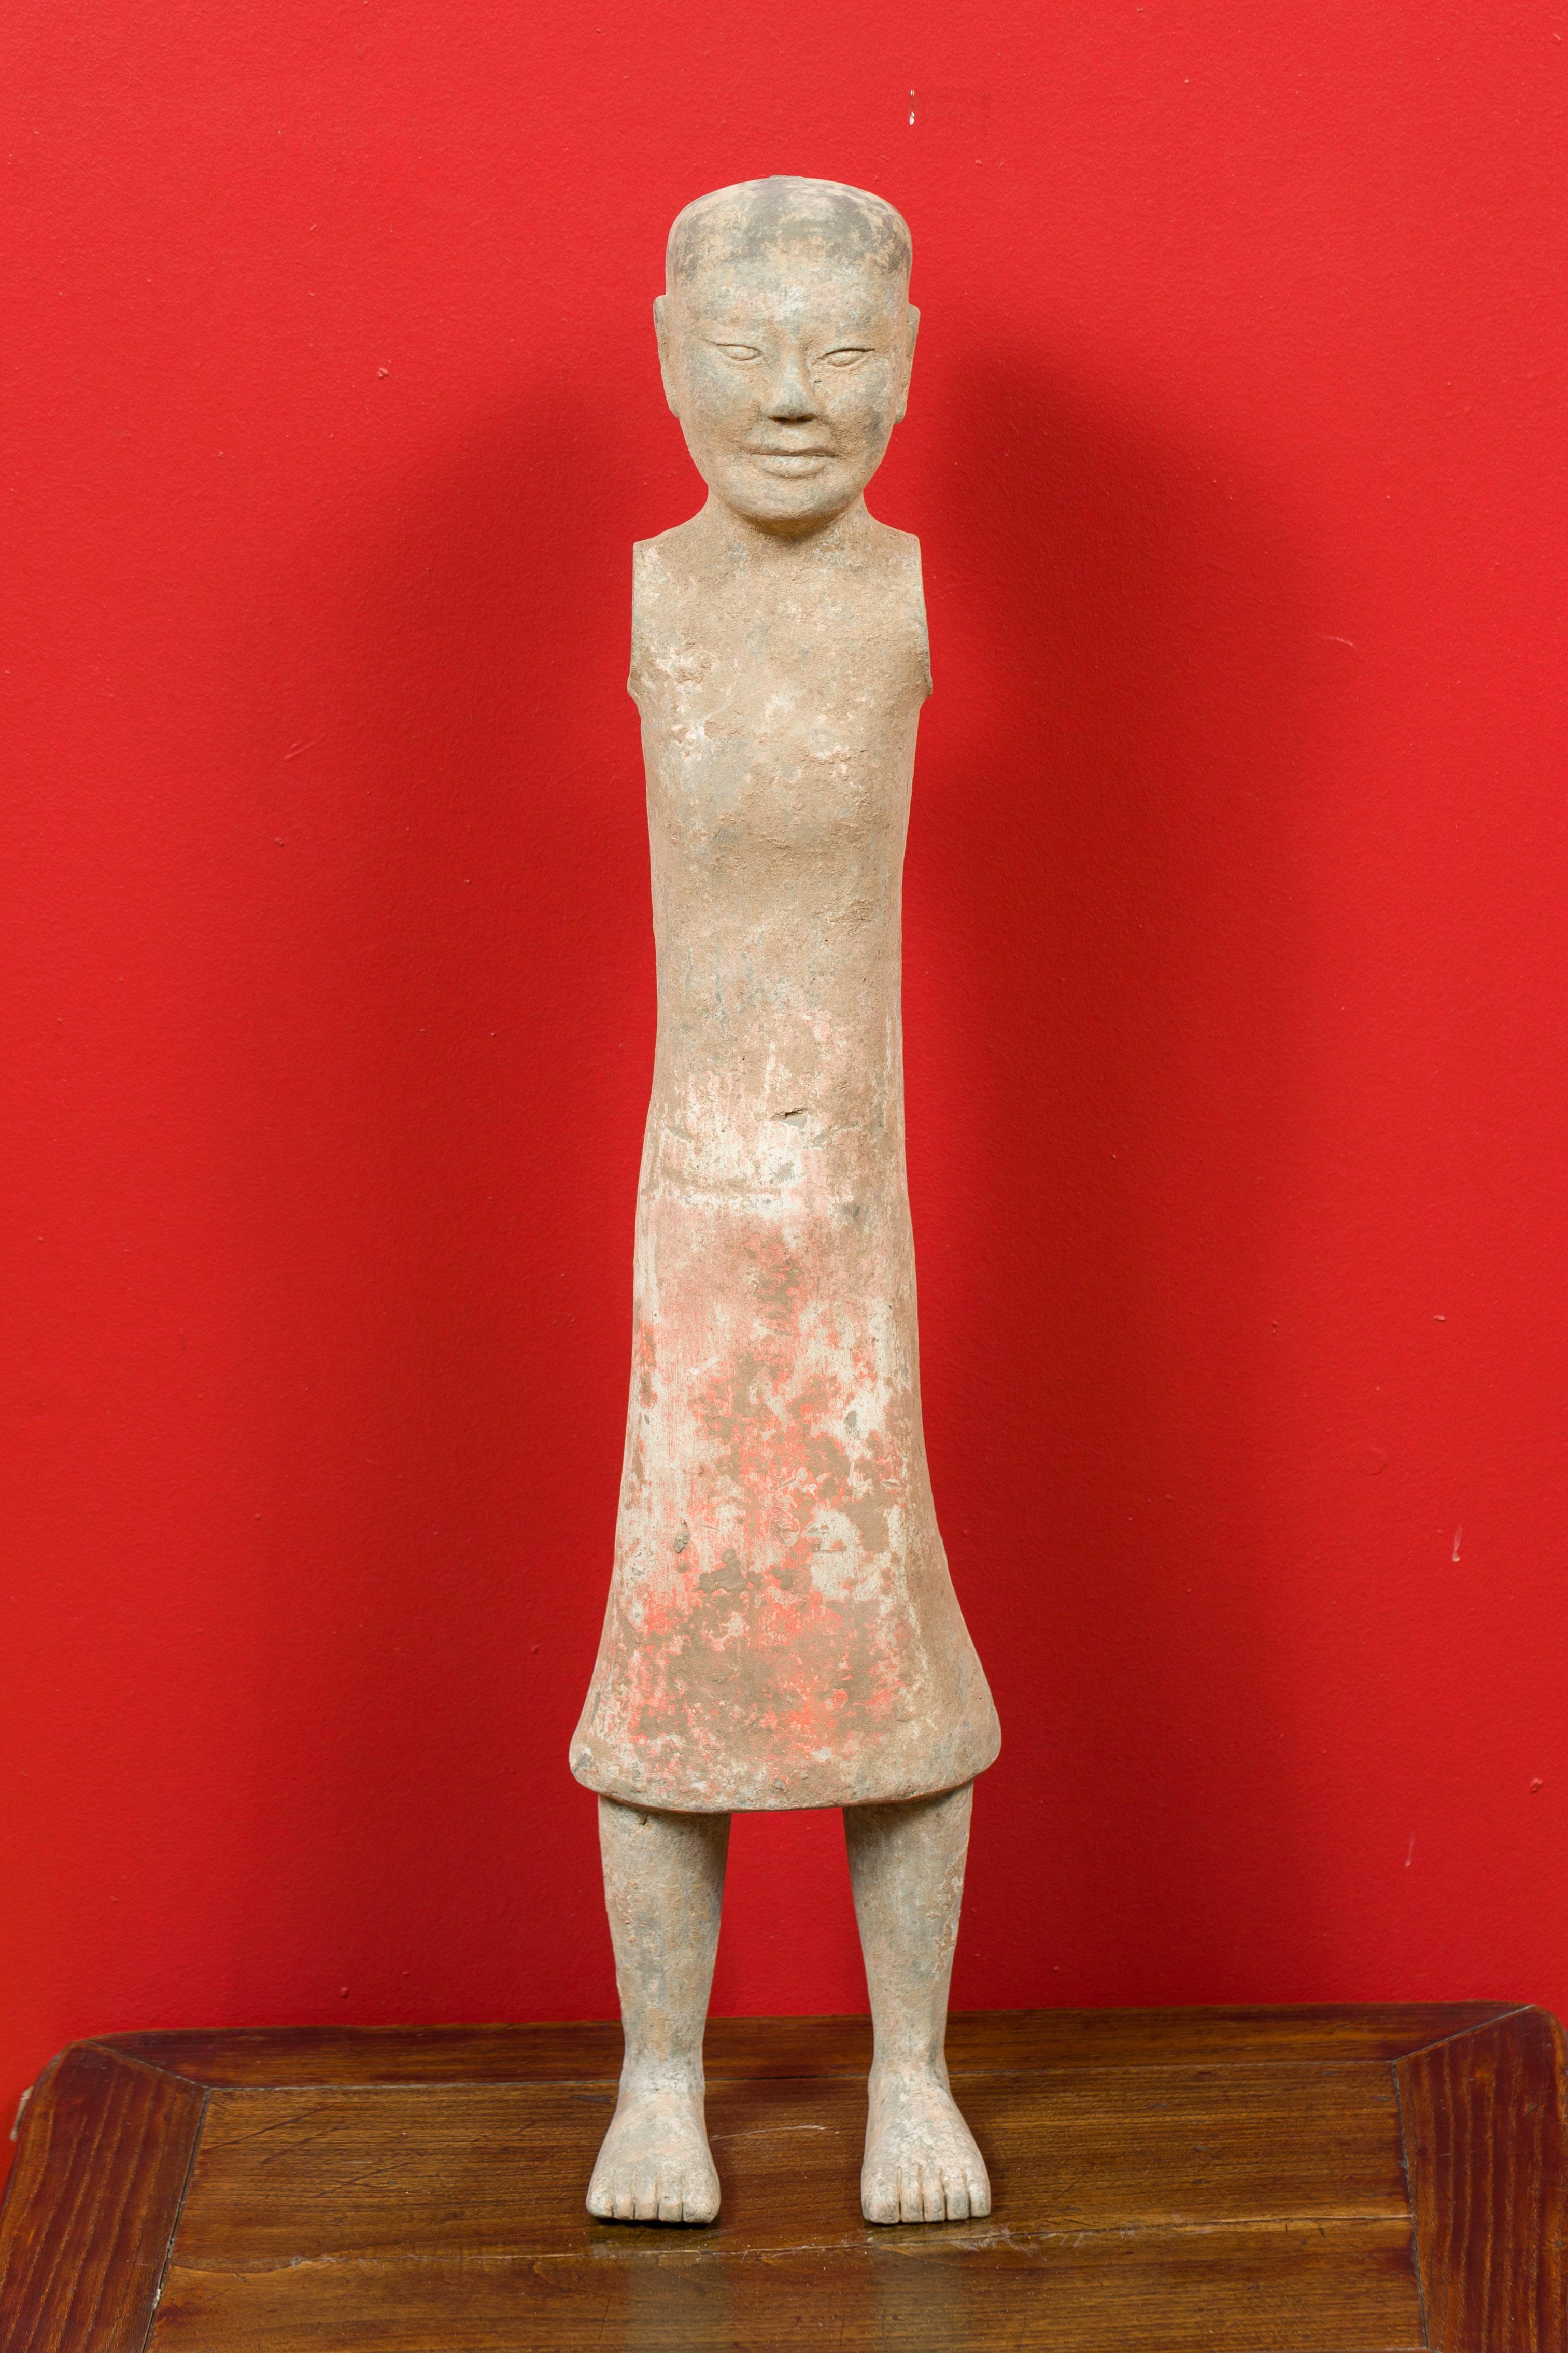 Western Han Dynasty 206 BC-24 AD Chinese Figurine with Original Polychromy 4